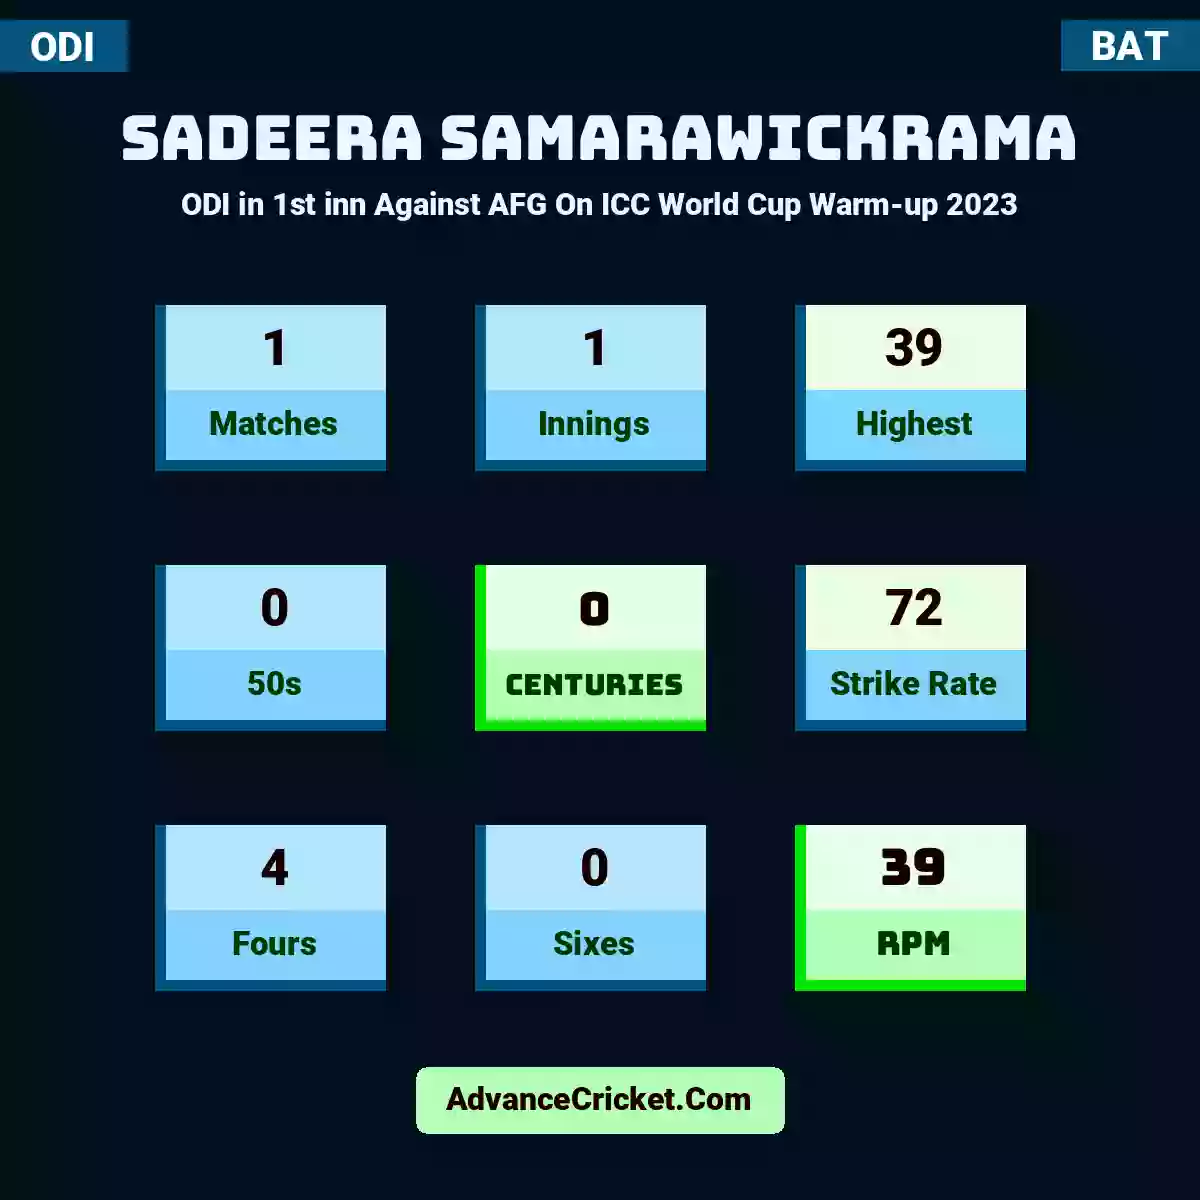 Sadeera Samarawickrama ODI  in 1st inn Against AFG On ICC World Cup Warm-up 2023, Sadeera Samarawickrama played 1 matches, scored 39 runs as highest, 0 half-centuries, and 0 centuries, with a strike rate of 72. S.Samarawickrama hit 4 fours and 0 sixes, with an RPM of 39.